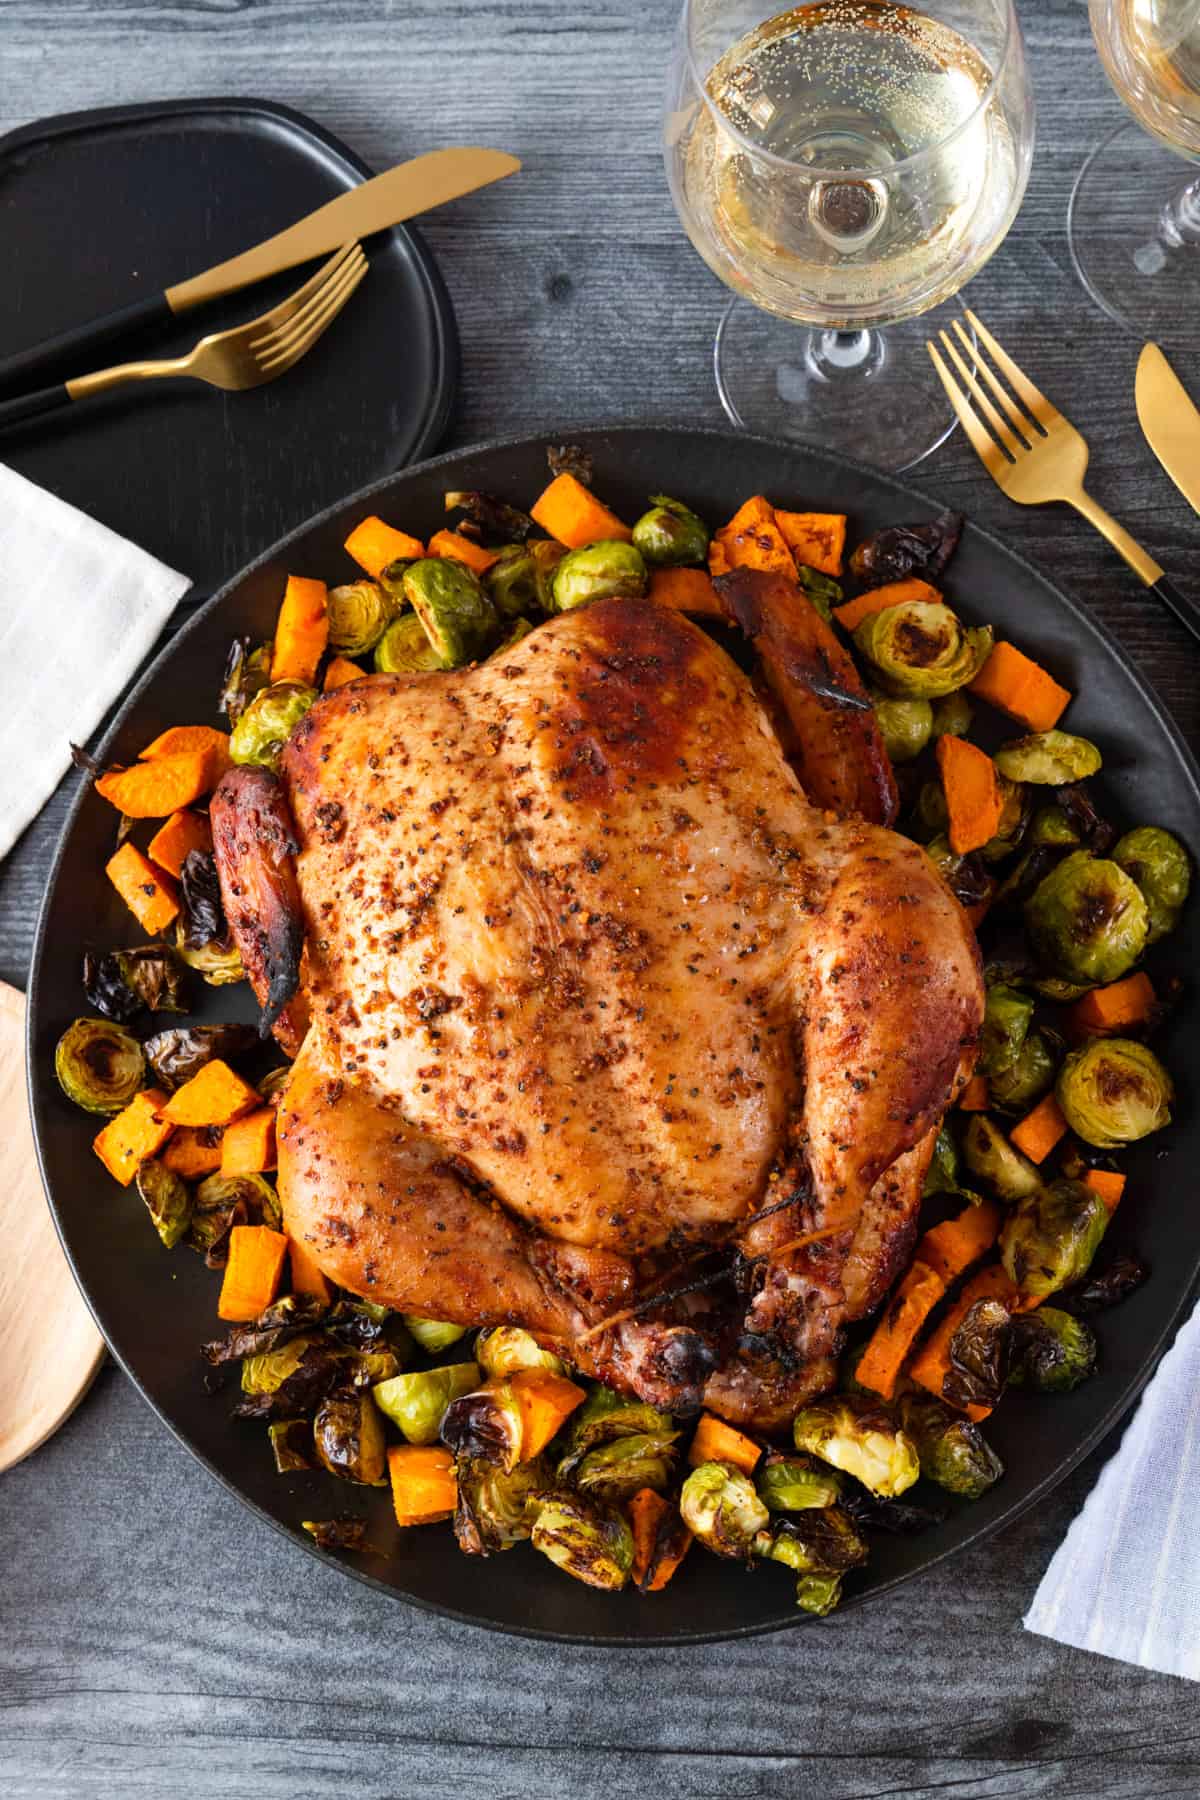 Smoked chicken on dark platter with vegetables surrounding chicken.